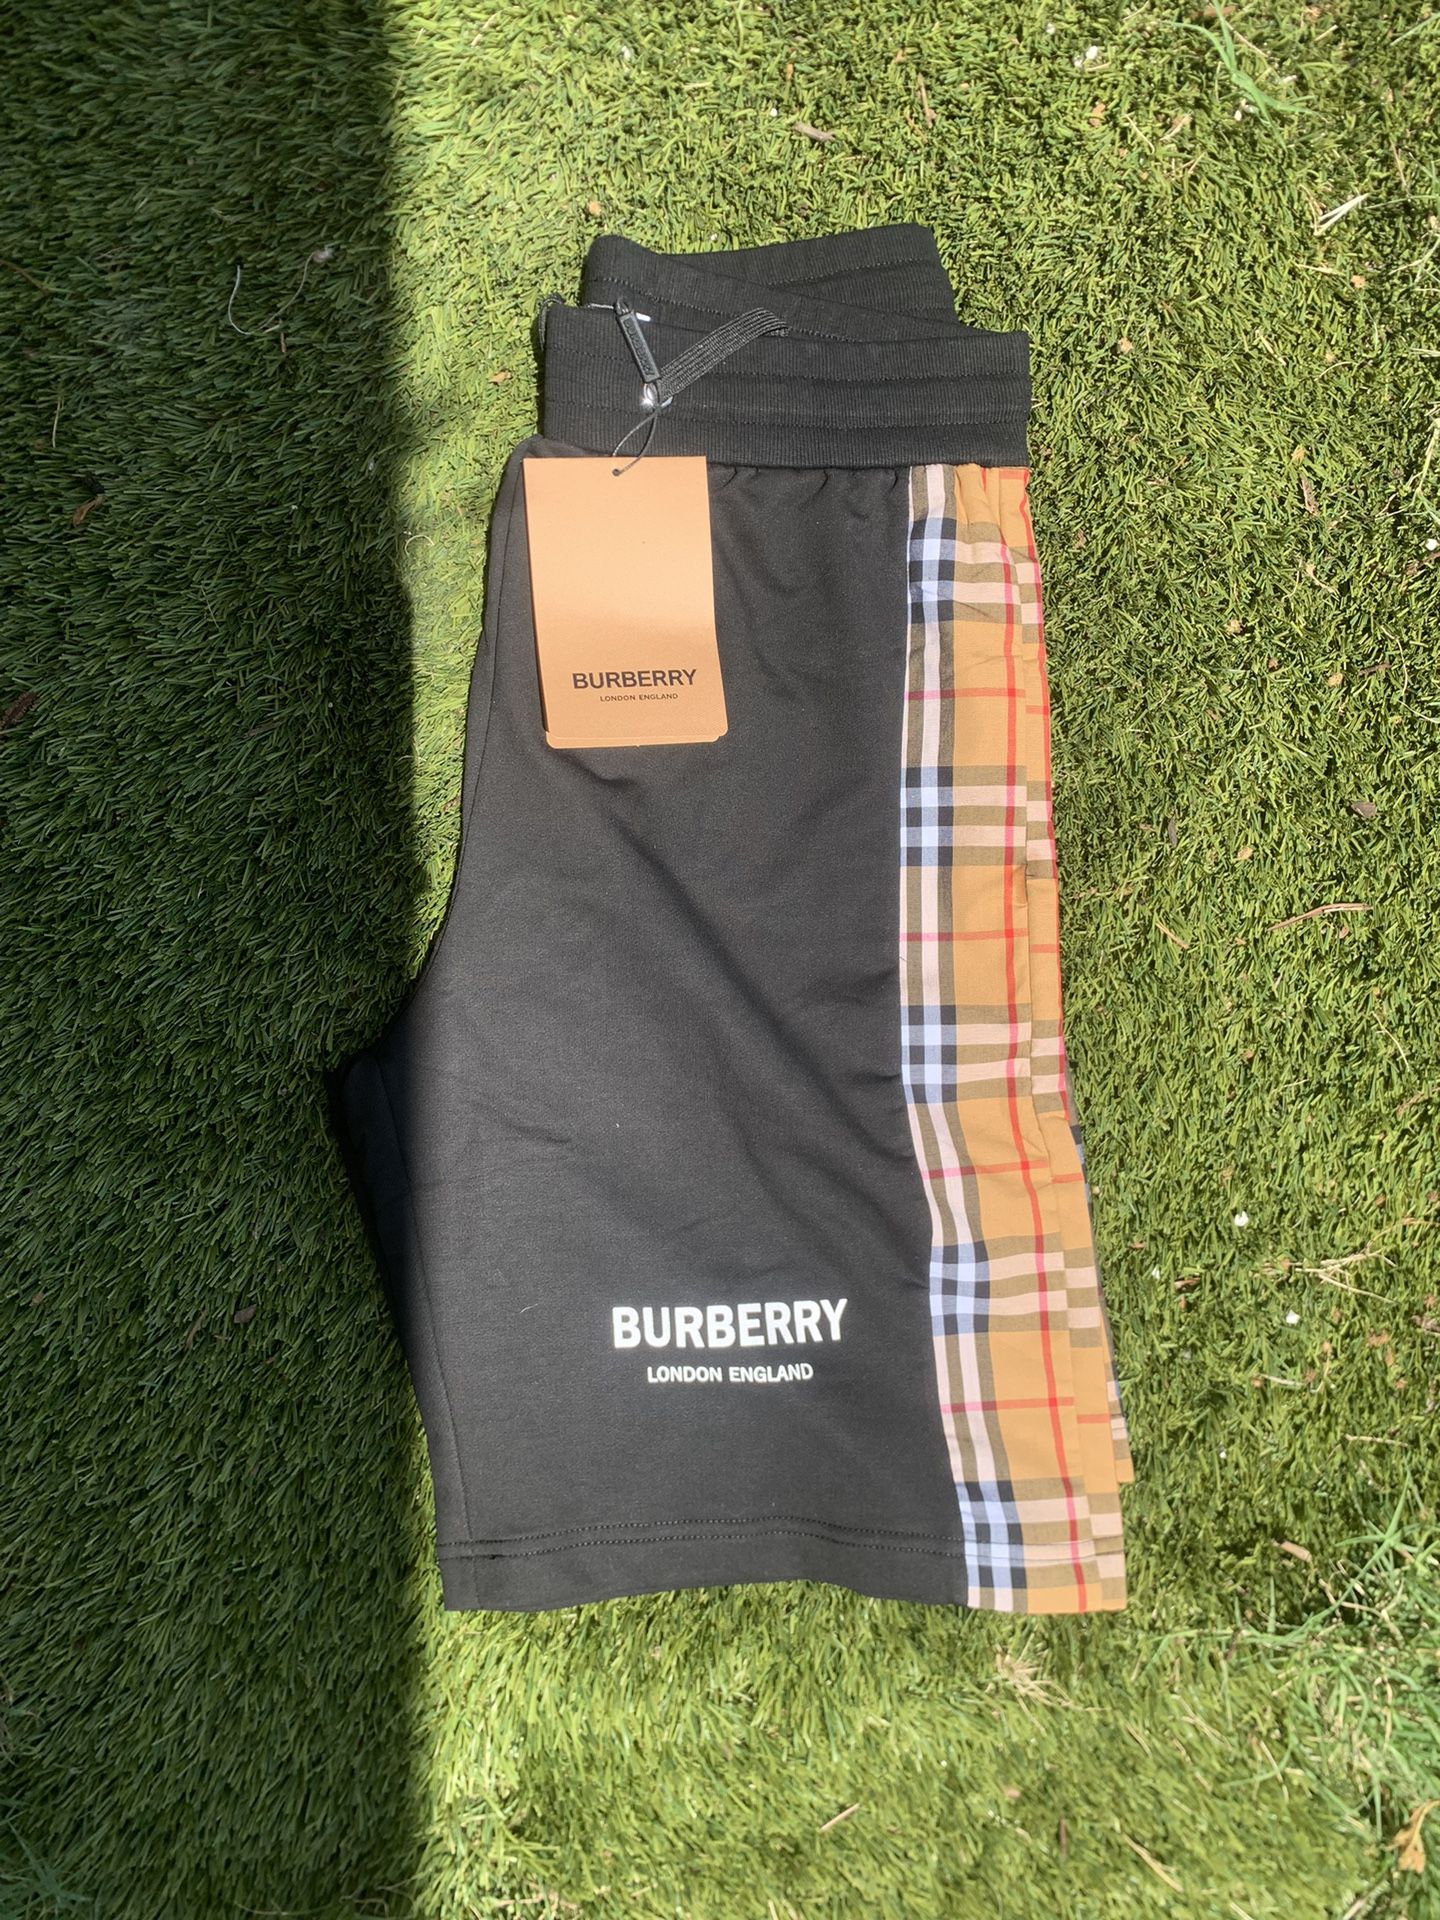 Burberry Shorts